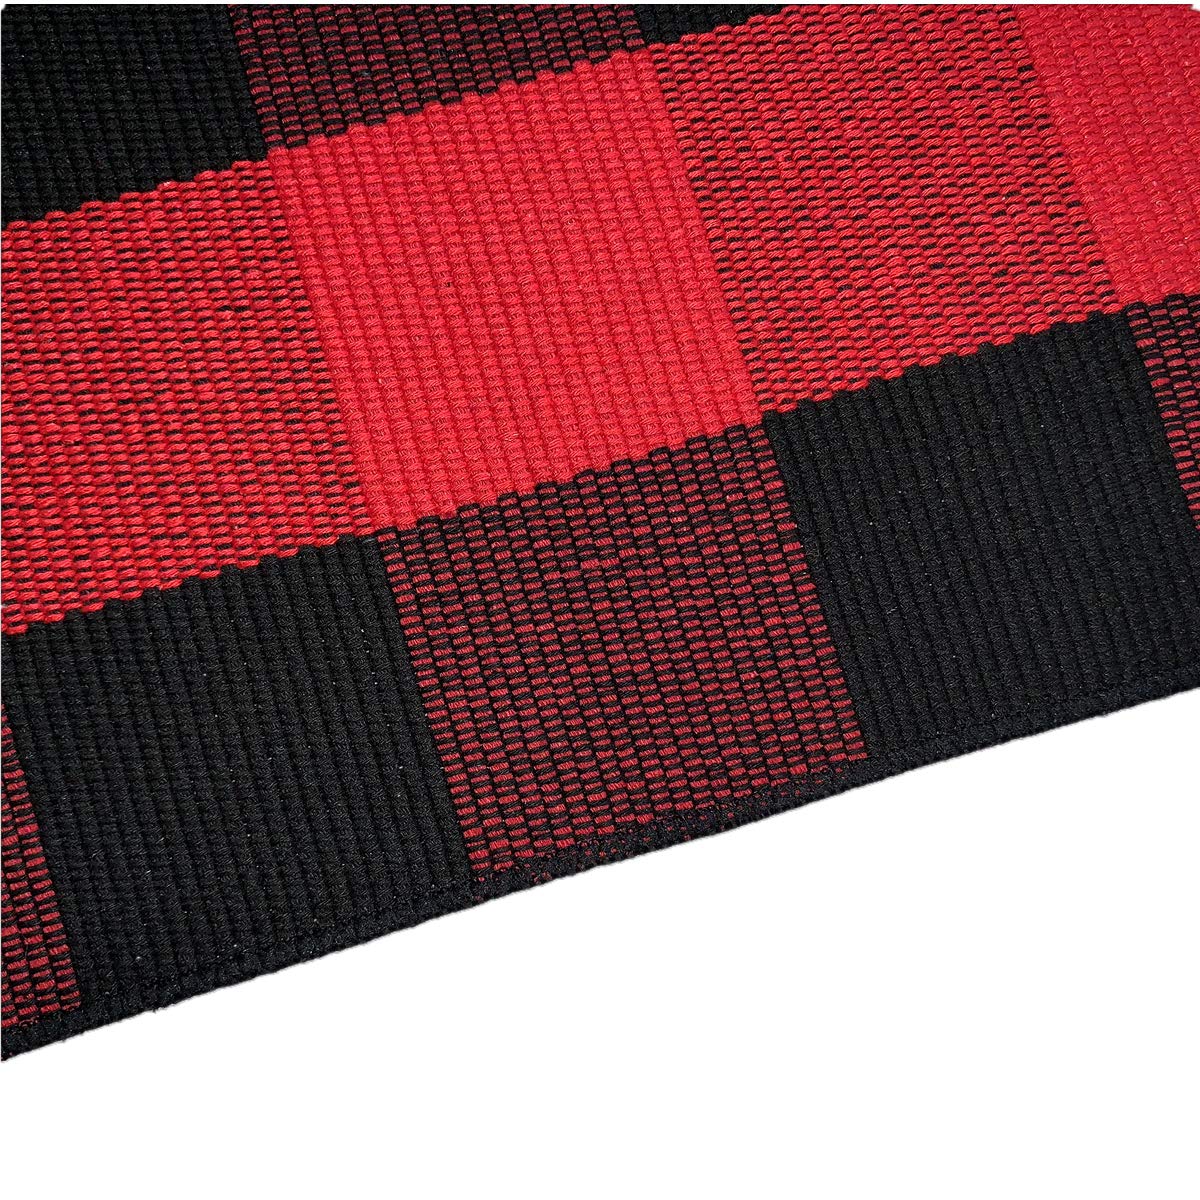 UKELER Buffalo Plaid Rug 2'×3'- Cotton Outdoor Rug Washable Buffalo Check Doormat, Red and Black Plaid